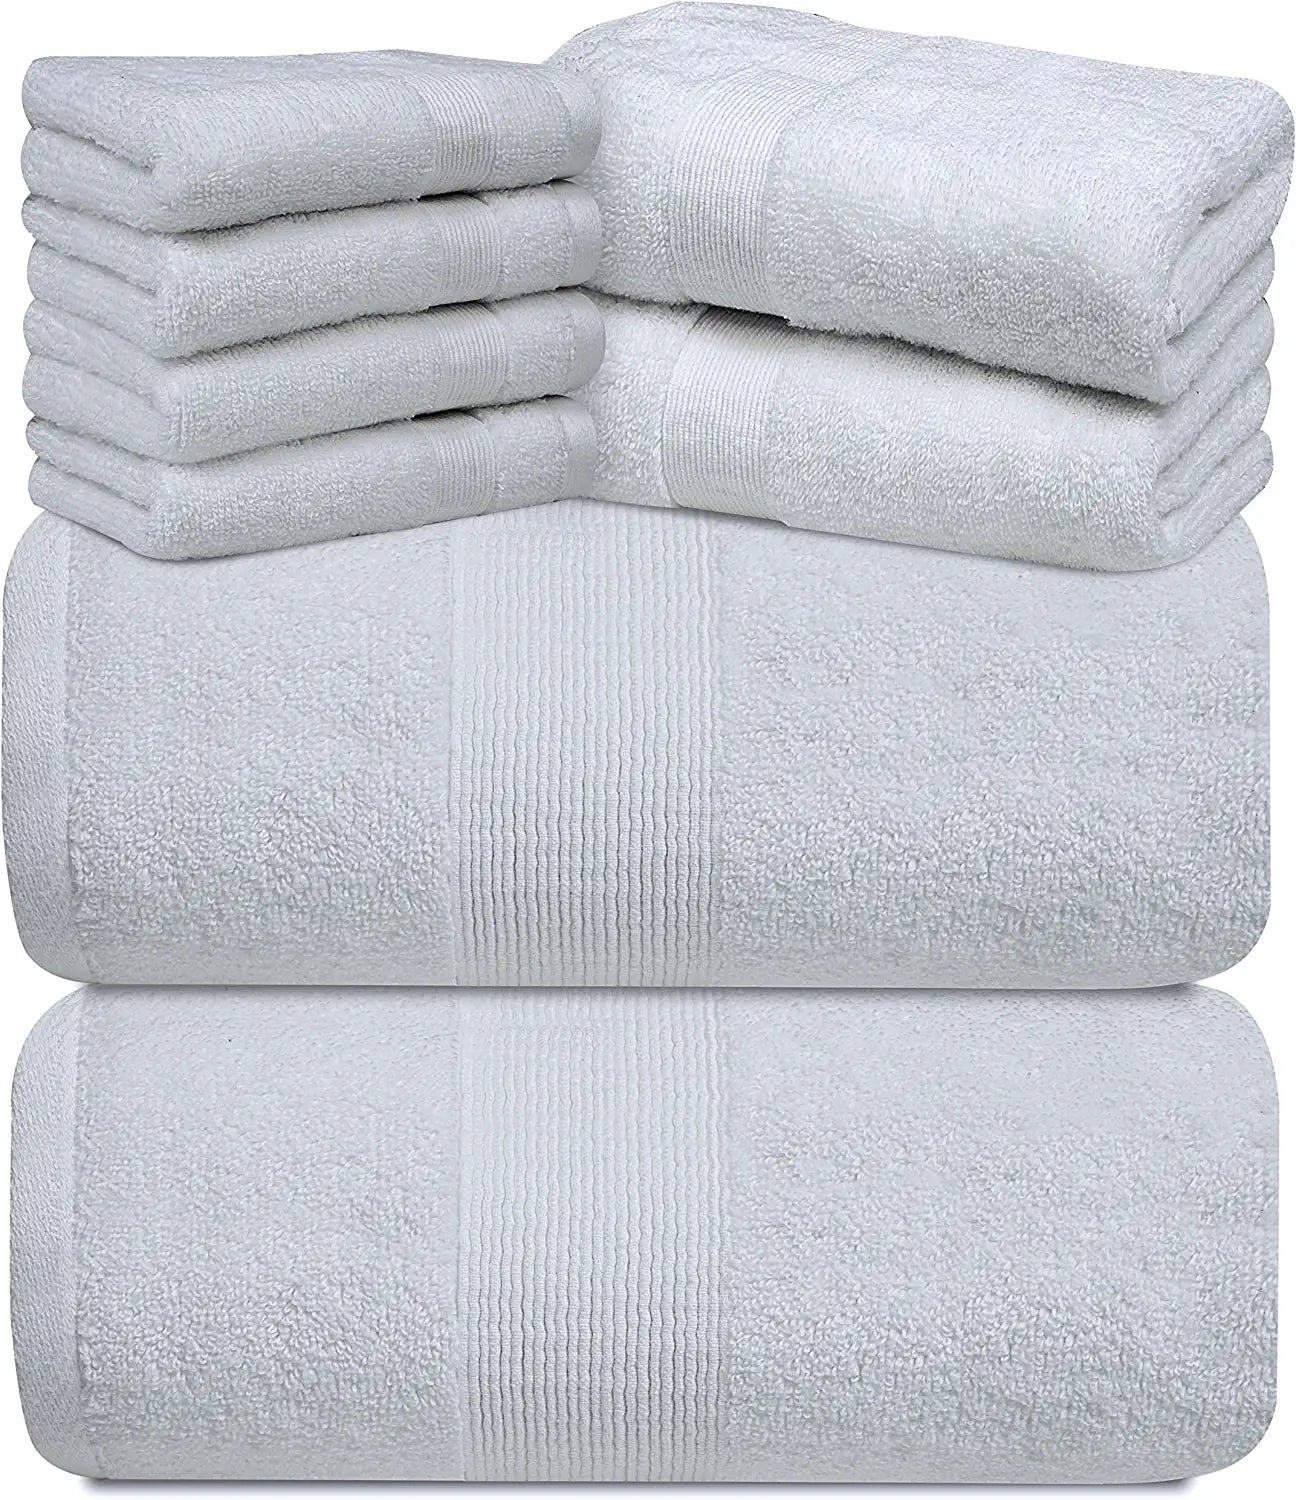 White 8Pc Towel Set